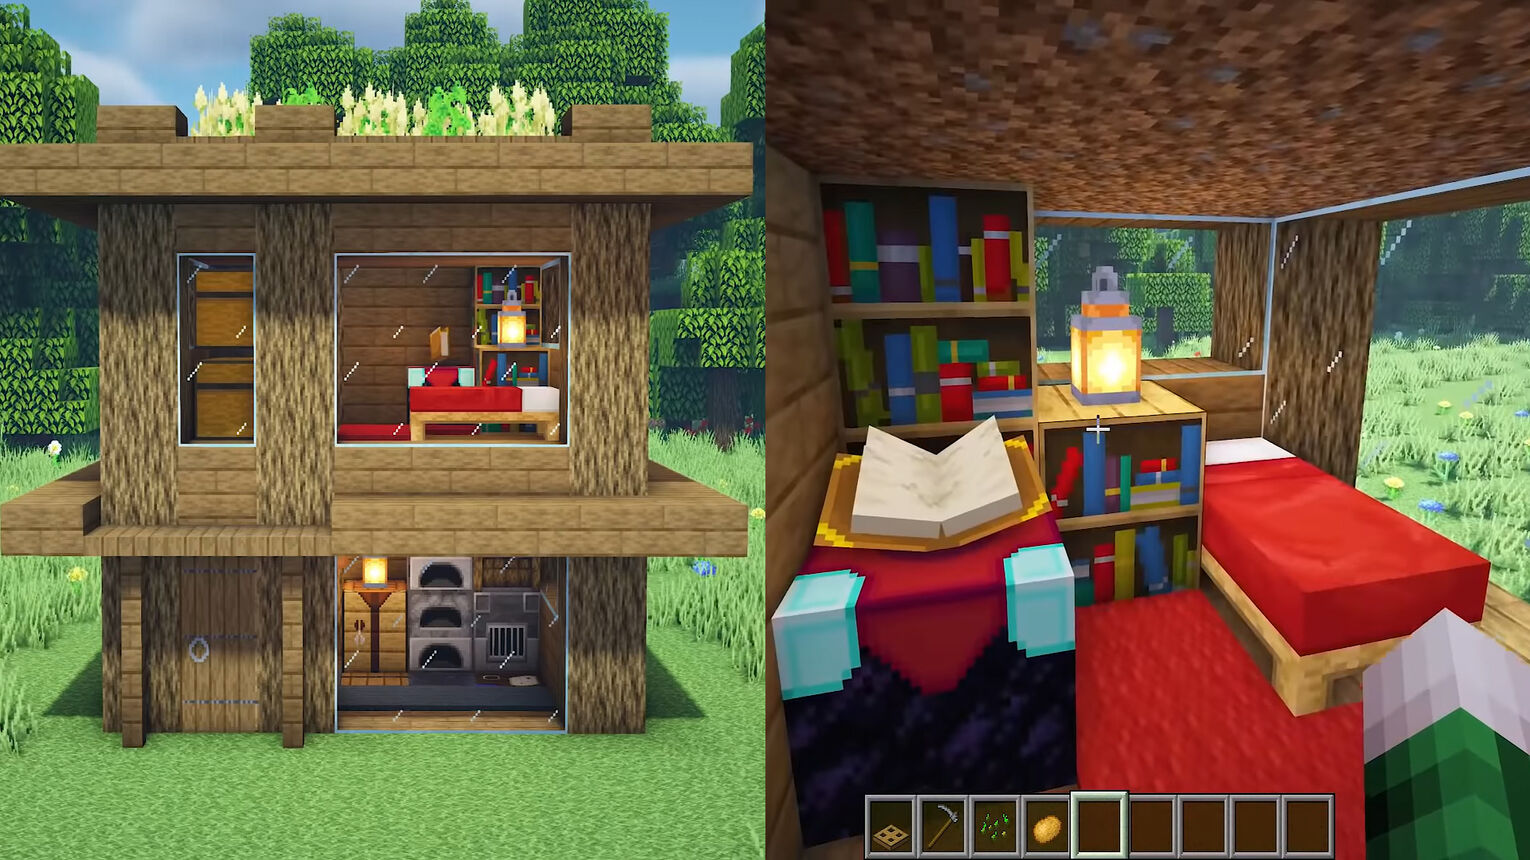 Minecraft Small House Idea With Farm On Roof